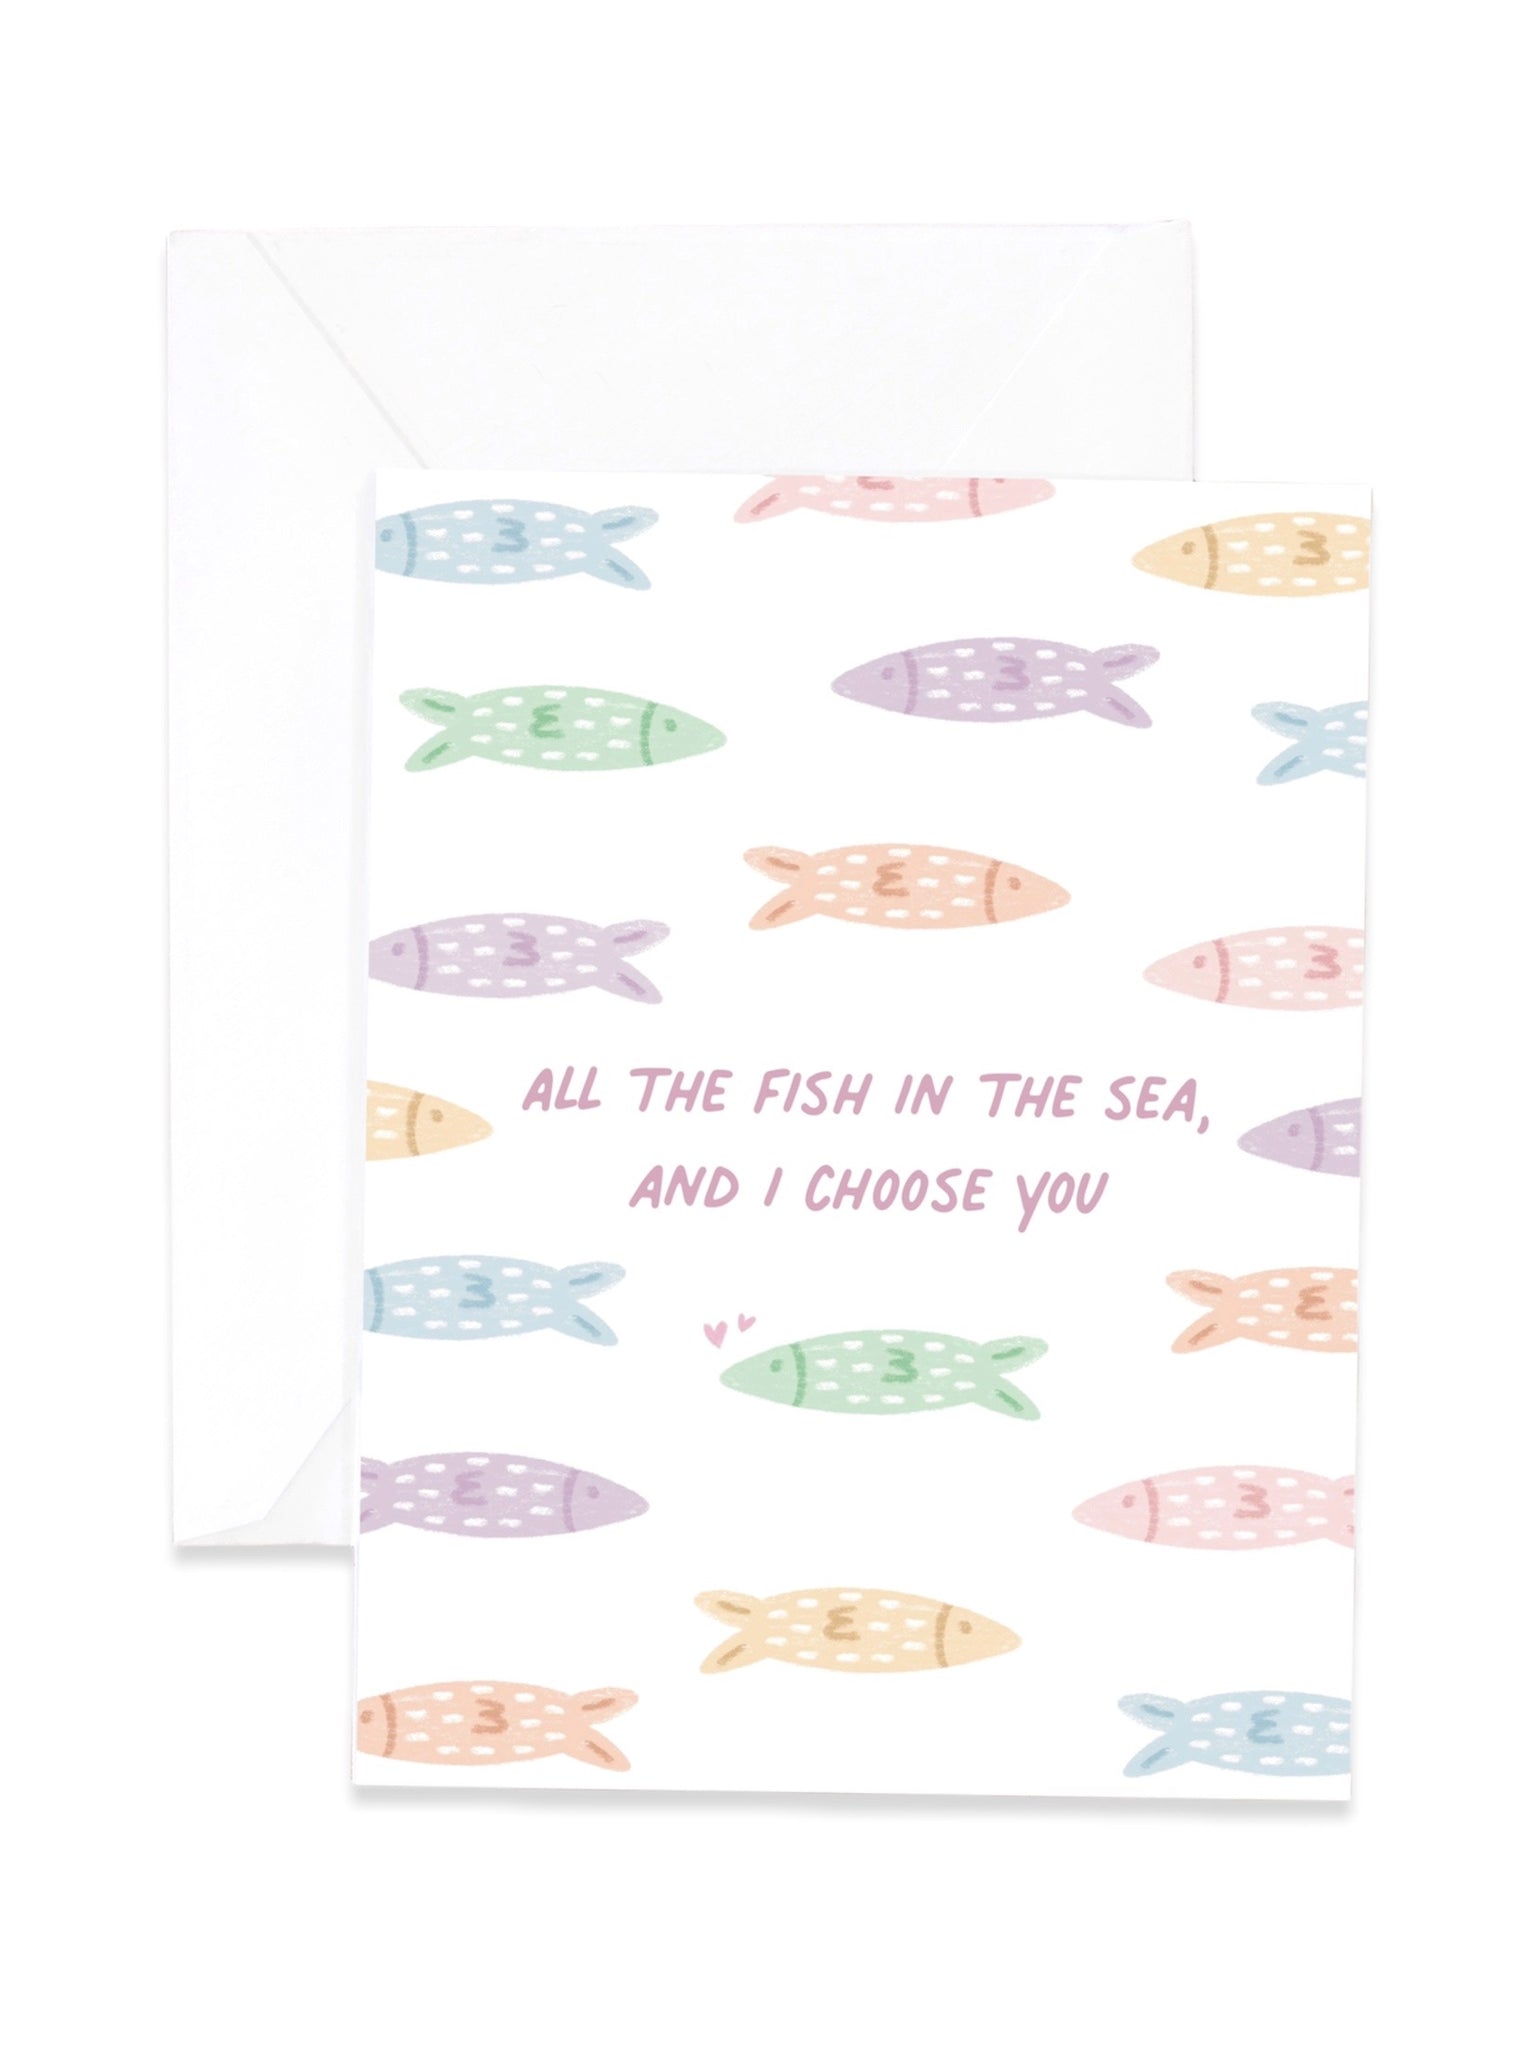 Fish in the Sea Greeting Card